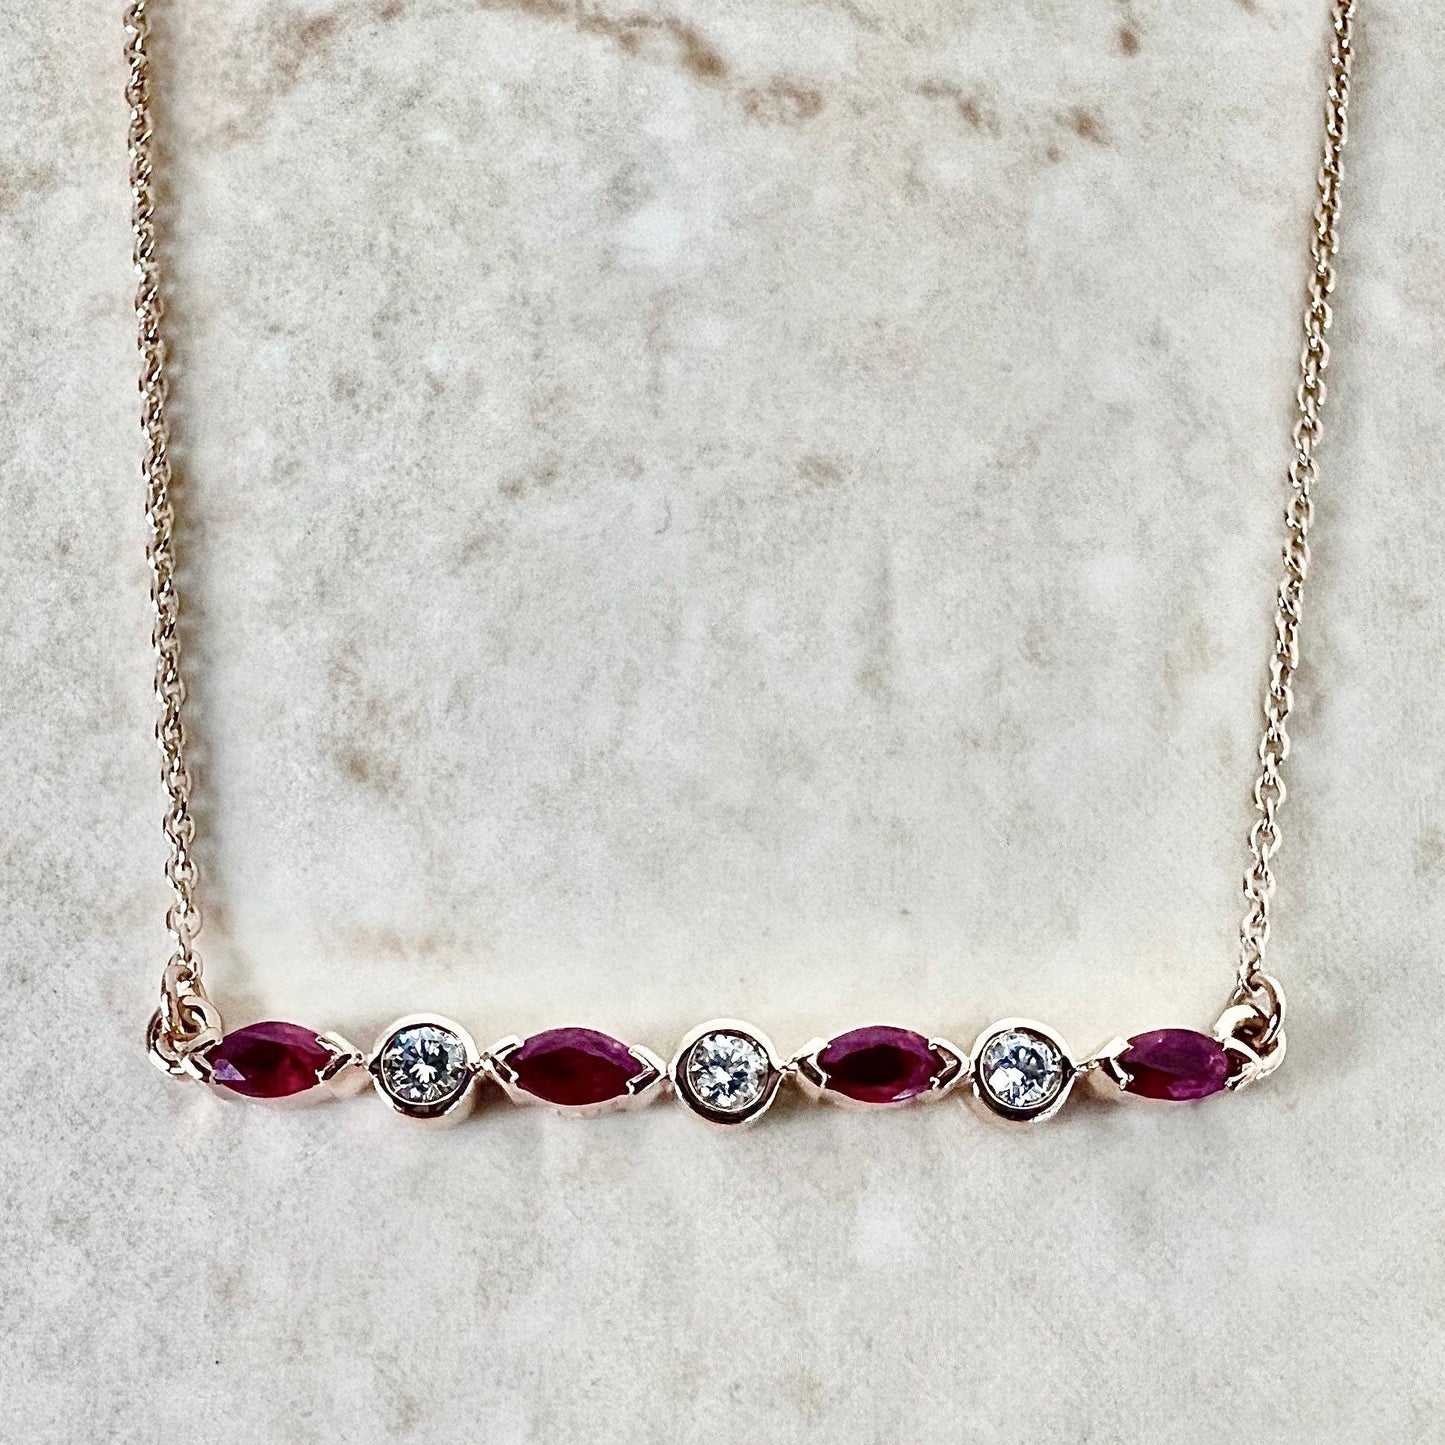 14K Ruby & Diamond Bar Pendant Necklace - Rose Gold Pendant Necklace - July Birthstone - Genuine Ruby - Holiday Gift - Birthday Gift